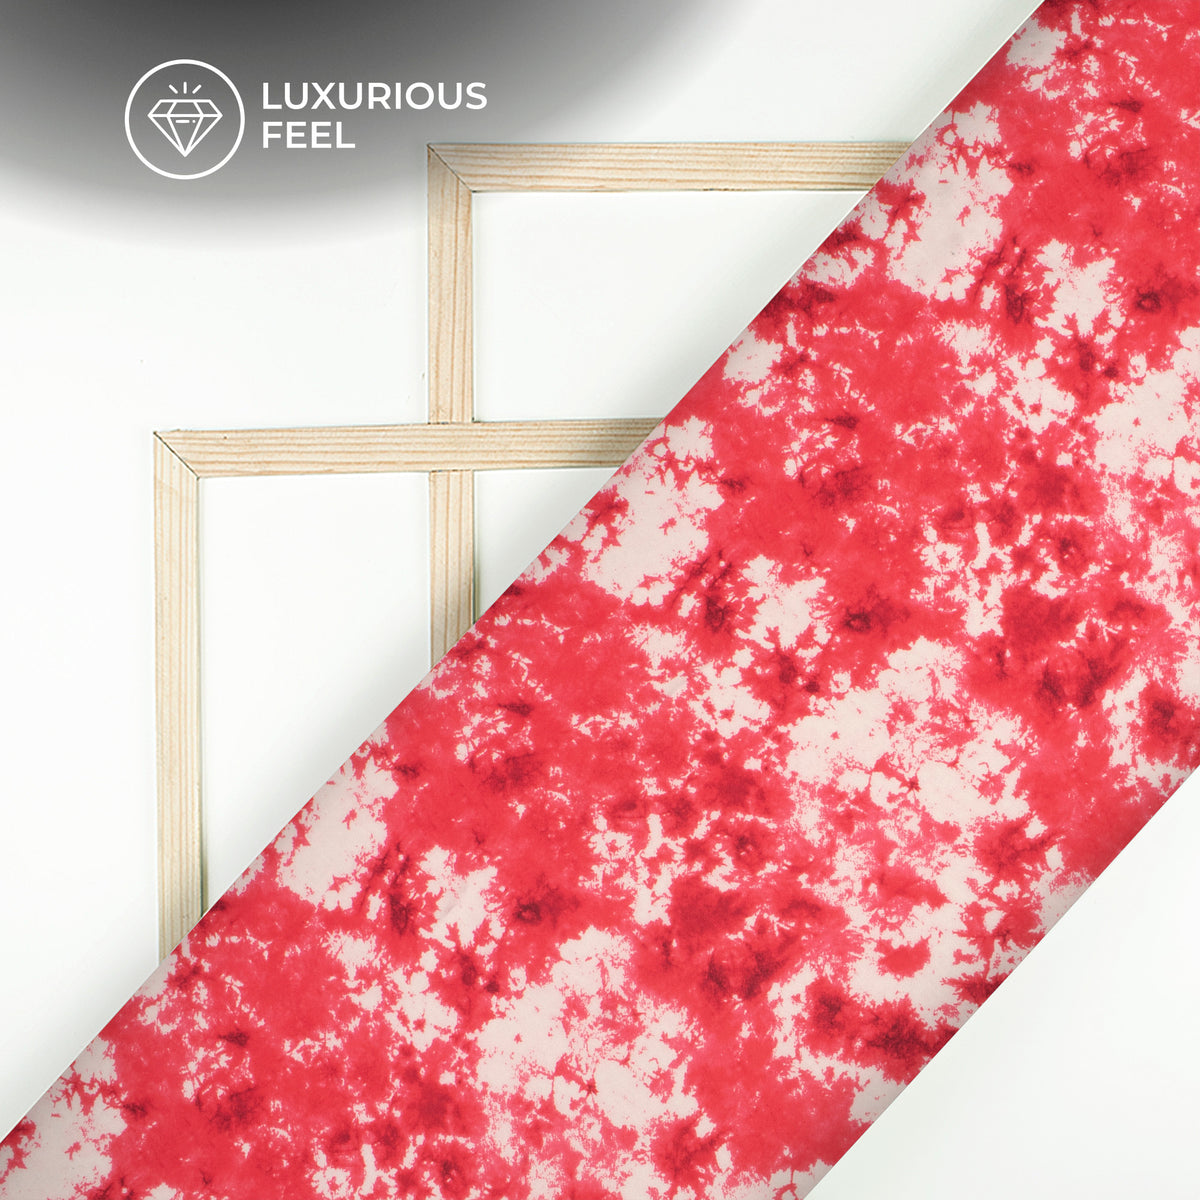 Rose Red Tie And Dye Digital Print Georgette Satin Fabric